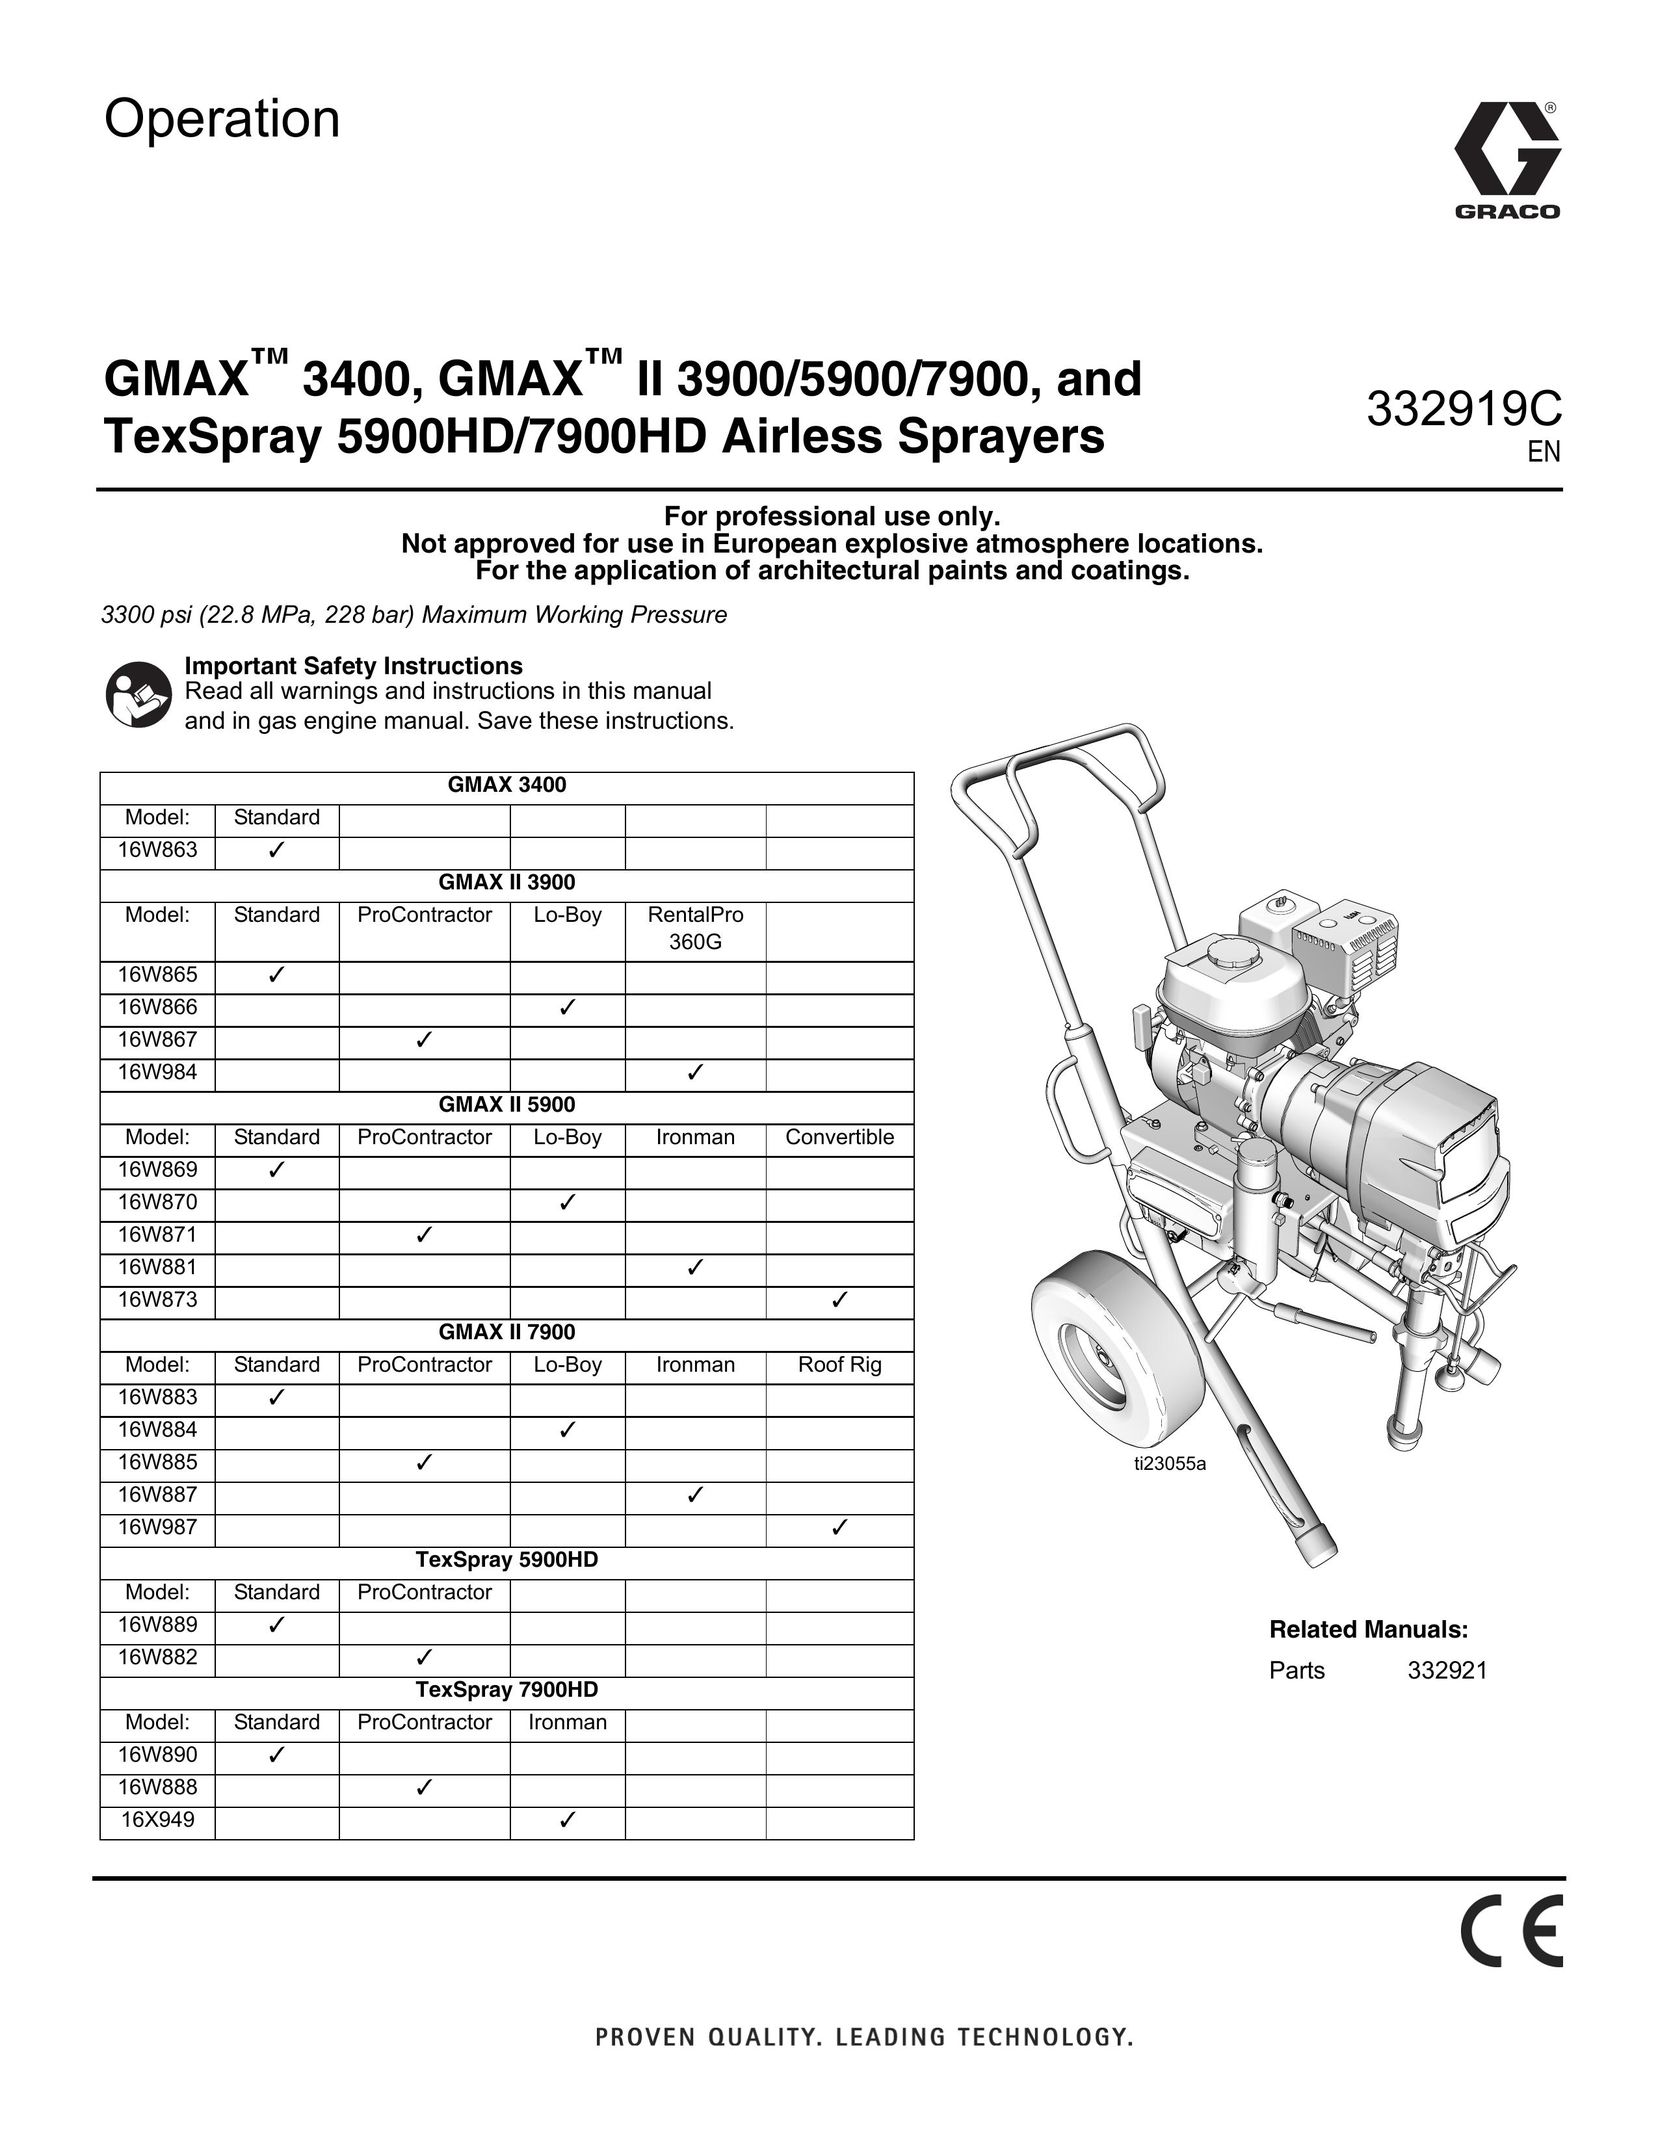 Graco 16W889 Paint Sprayer User Manual